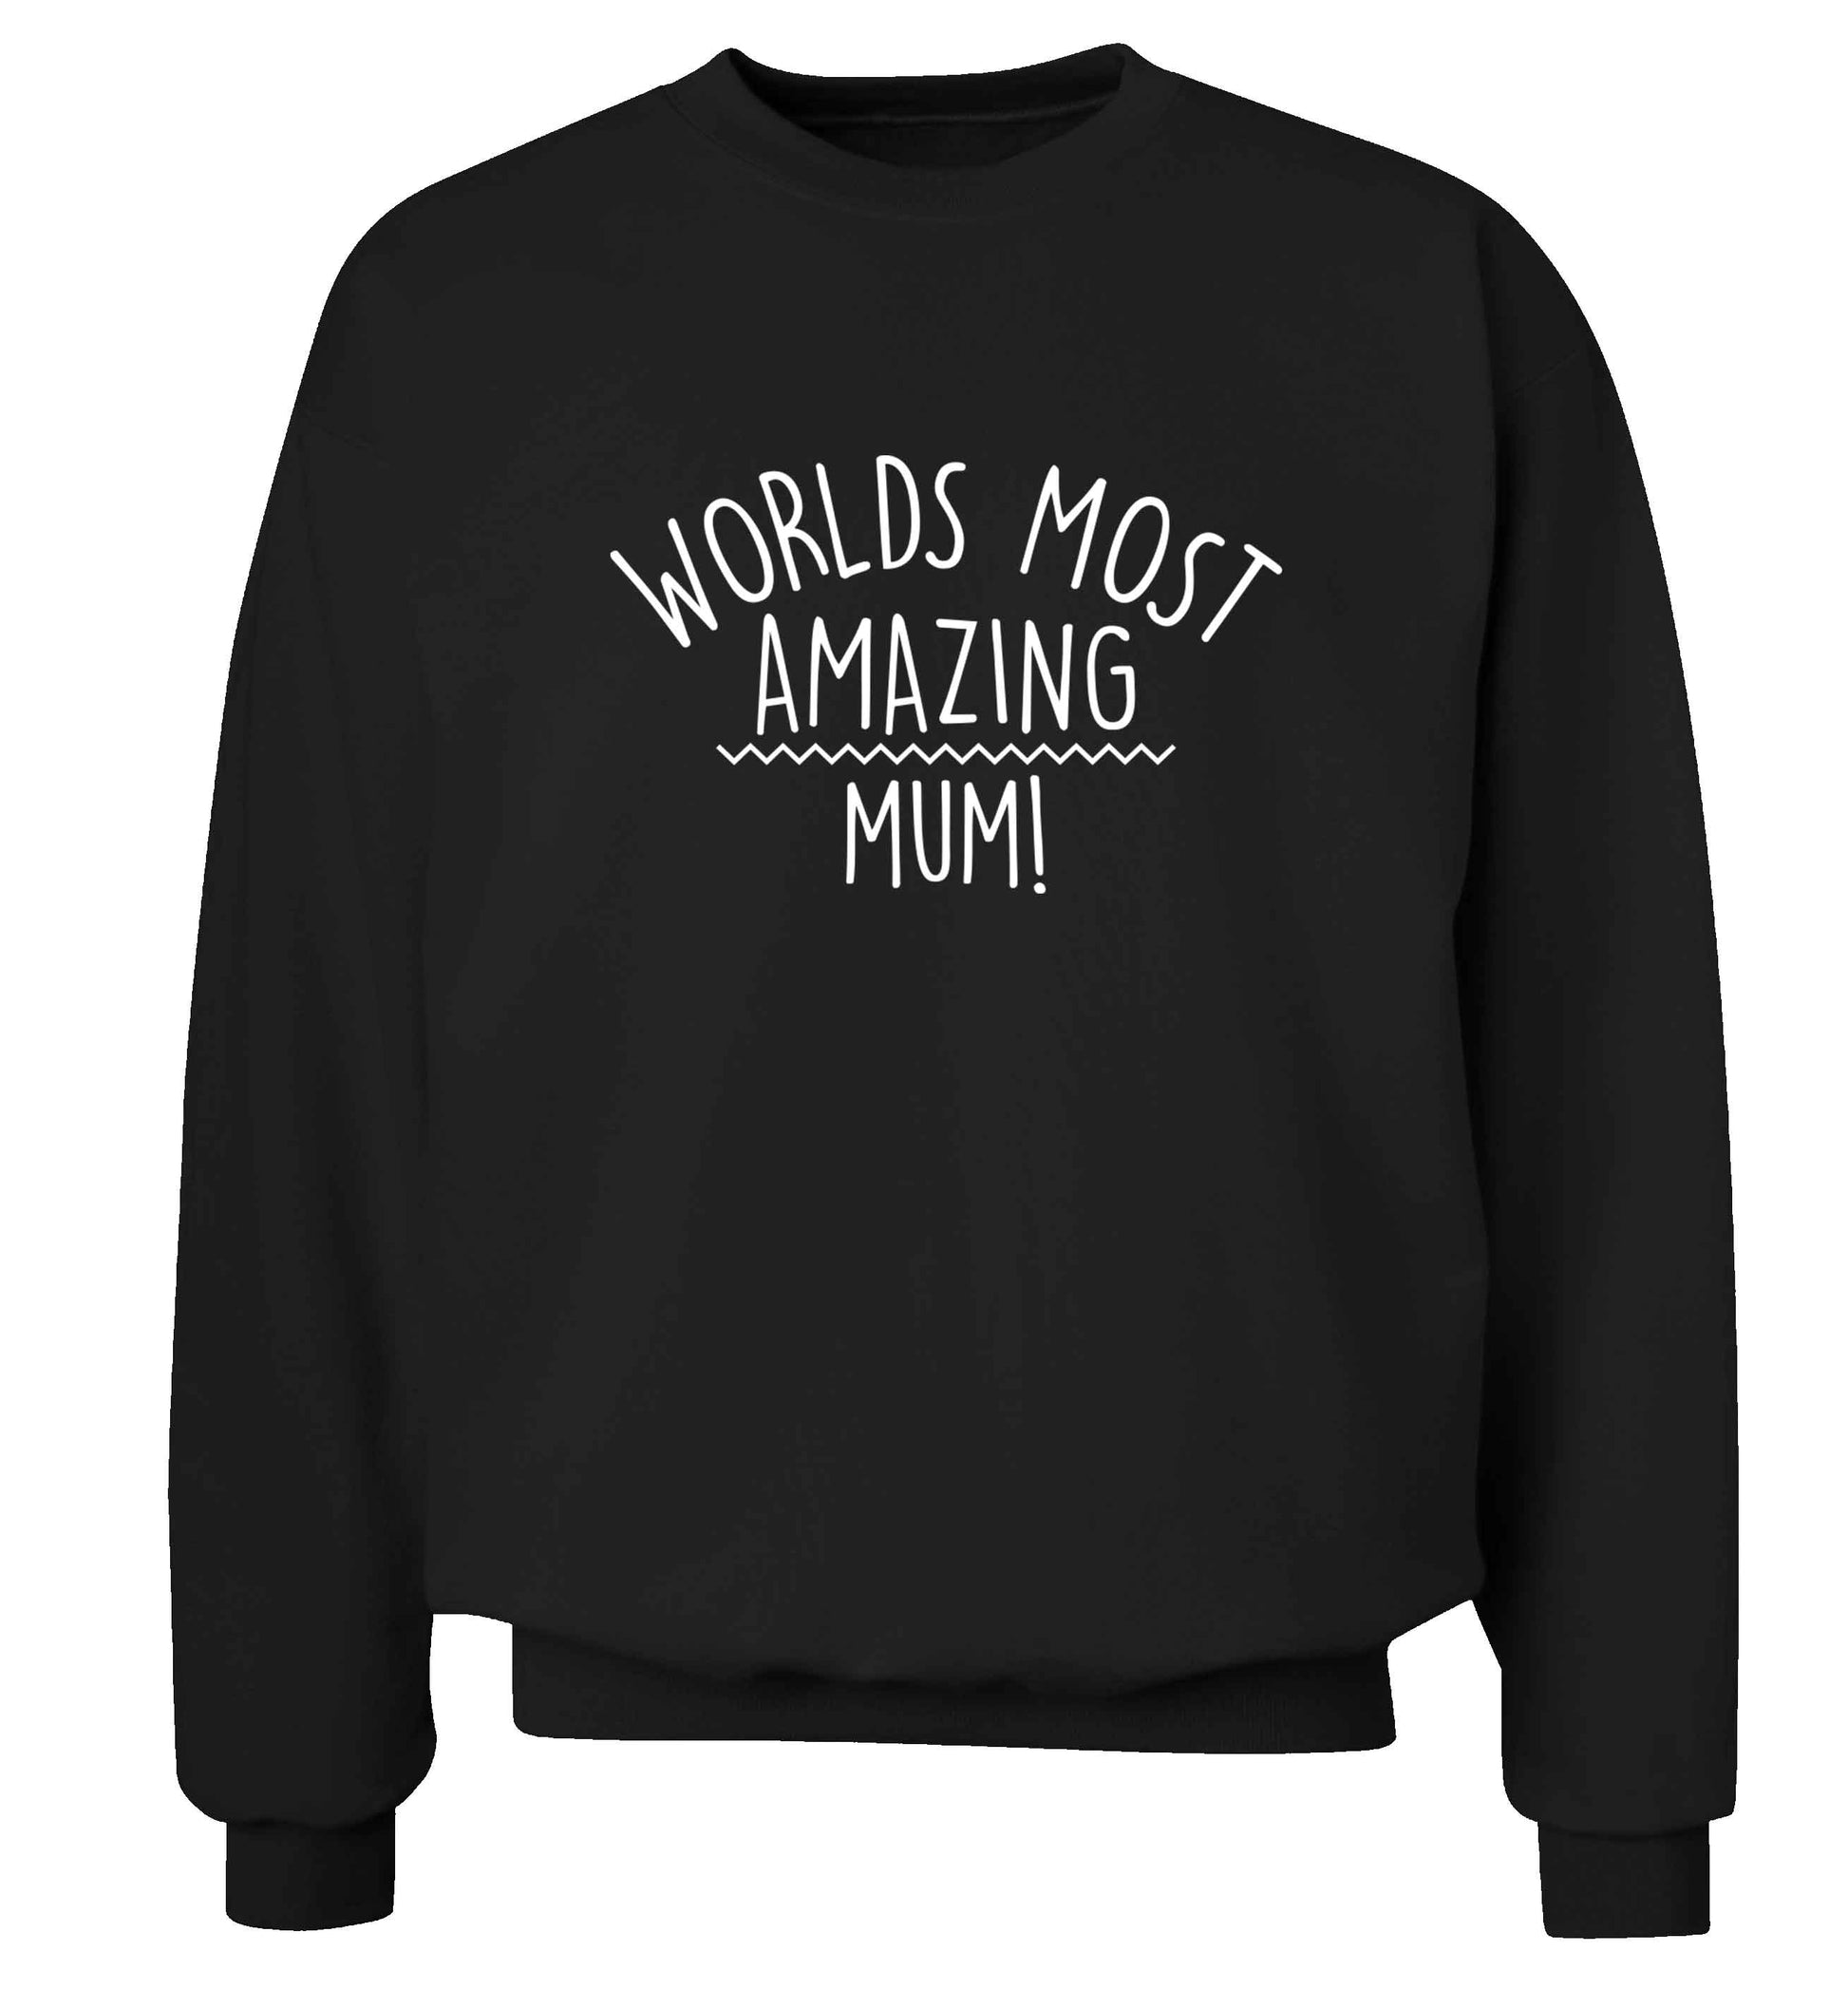 Worlds most amazing mum adult's unisex black sweater 2XL